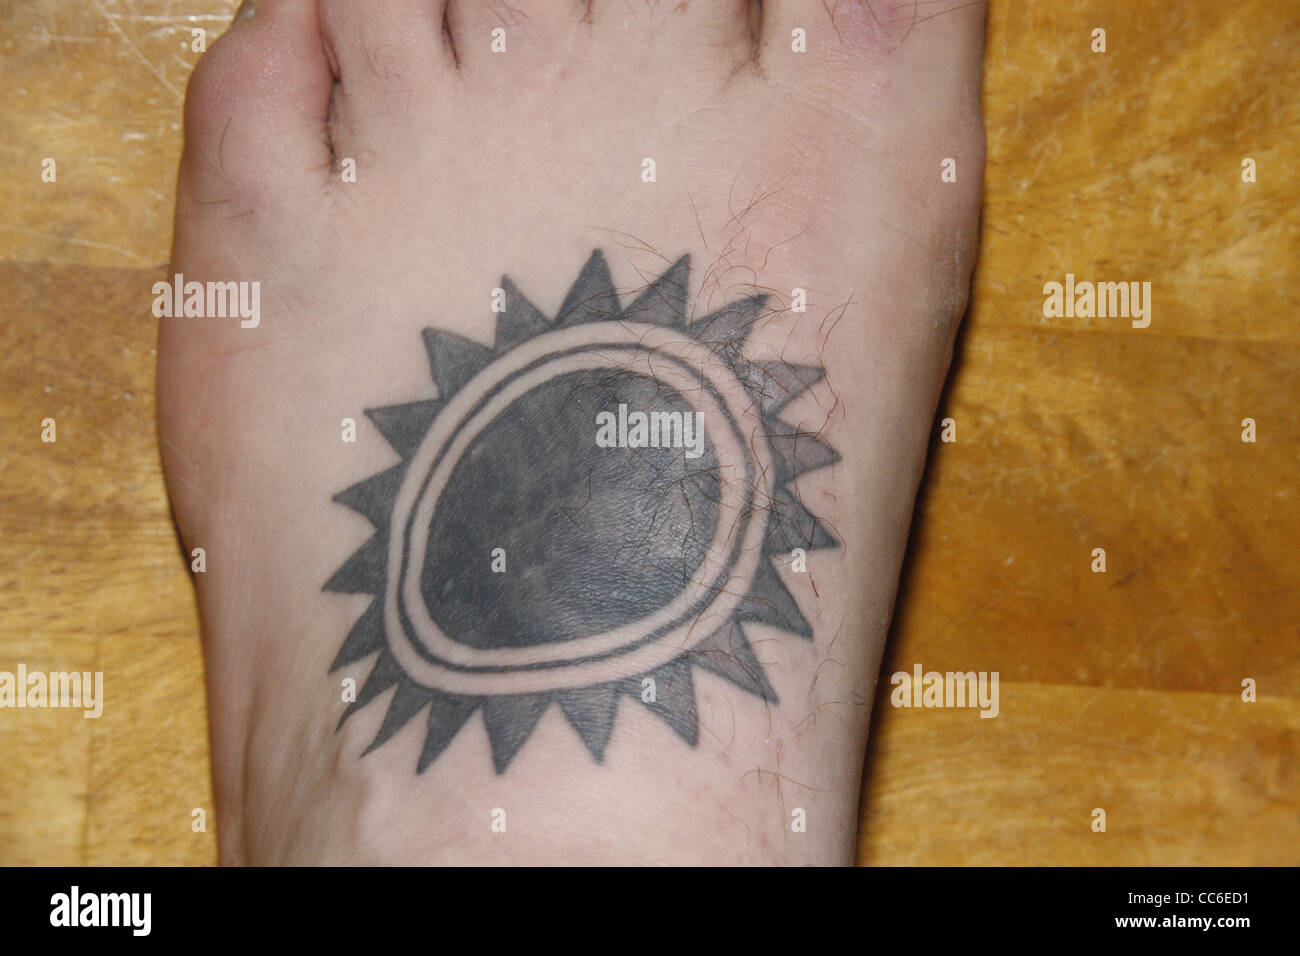 black sun tattoo on male foot Stock Photo